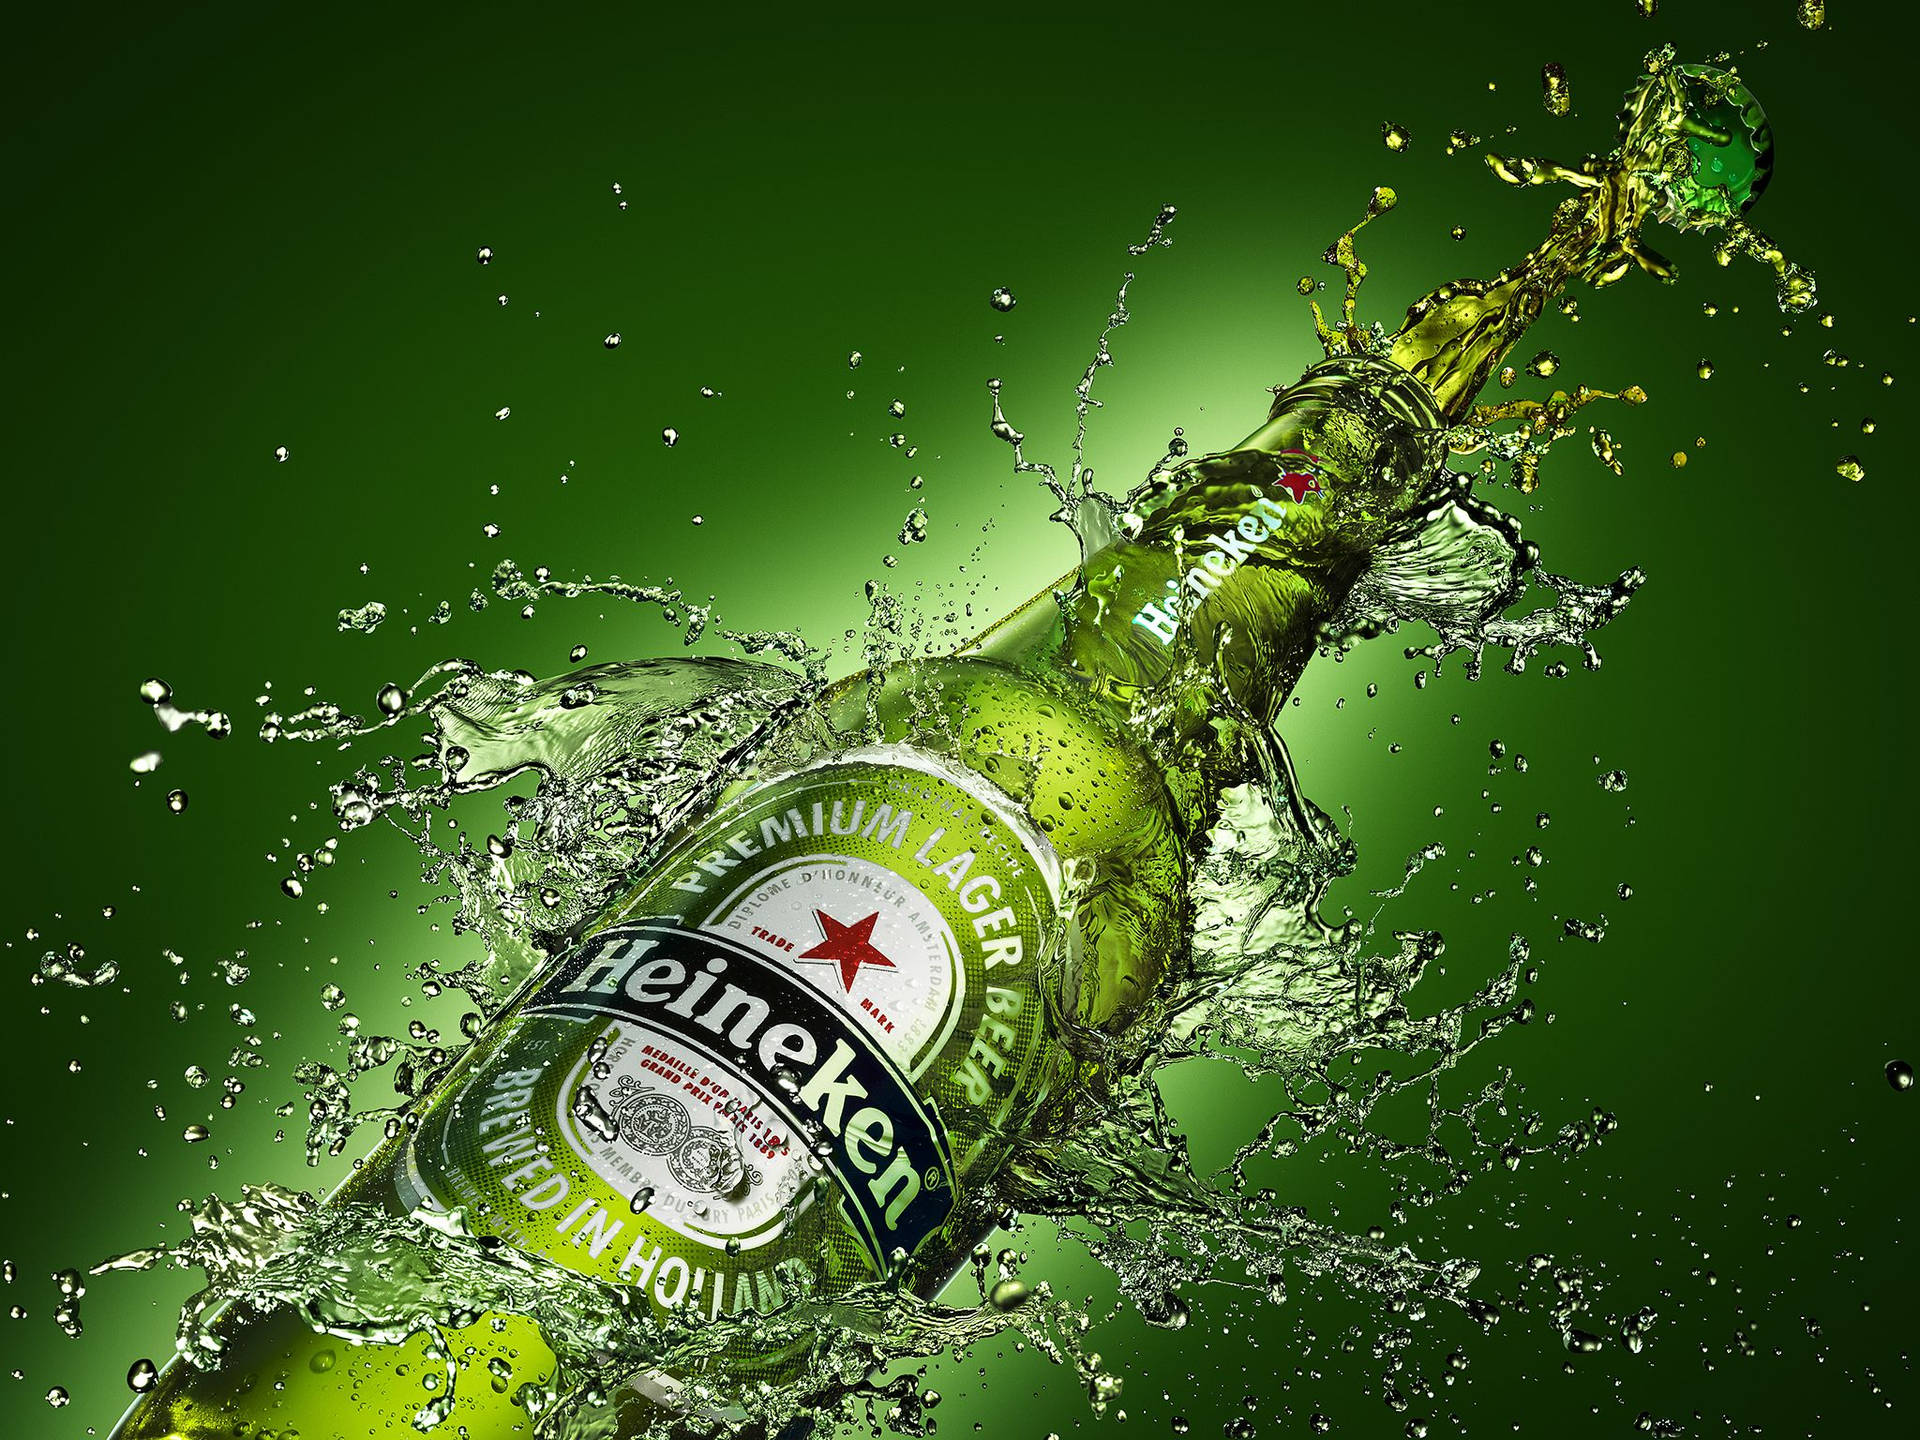 Efectode Agua Ondulante De La Cerveza Heineken Lager Fondo de pantalla